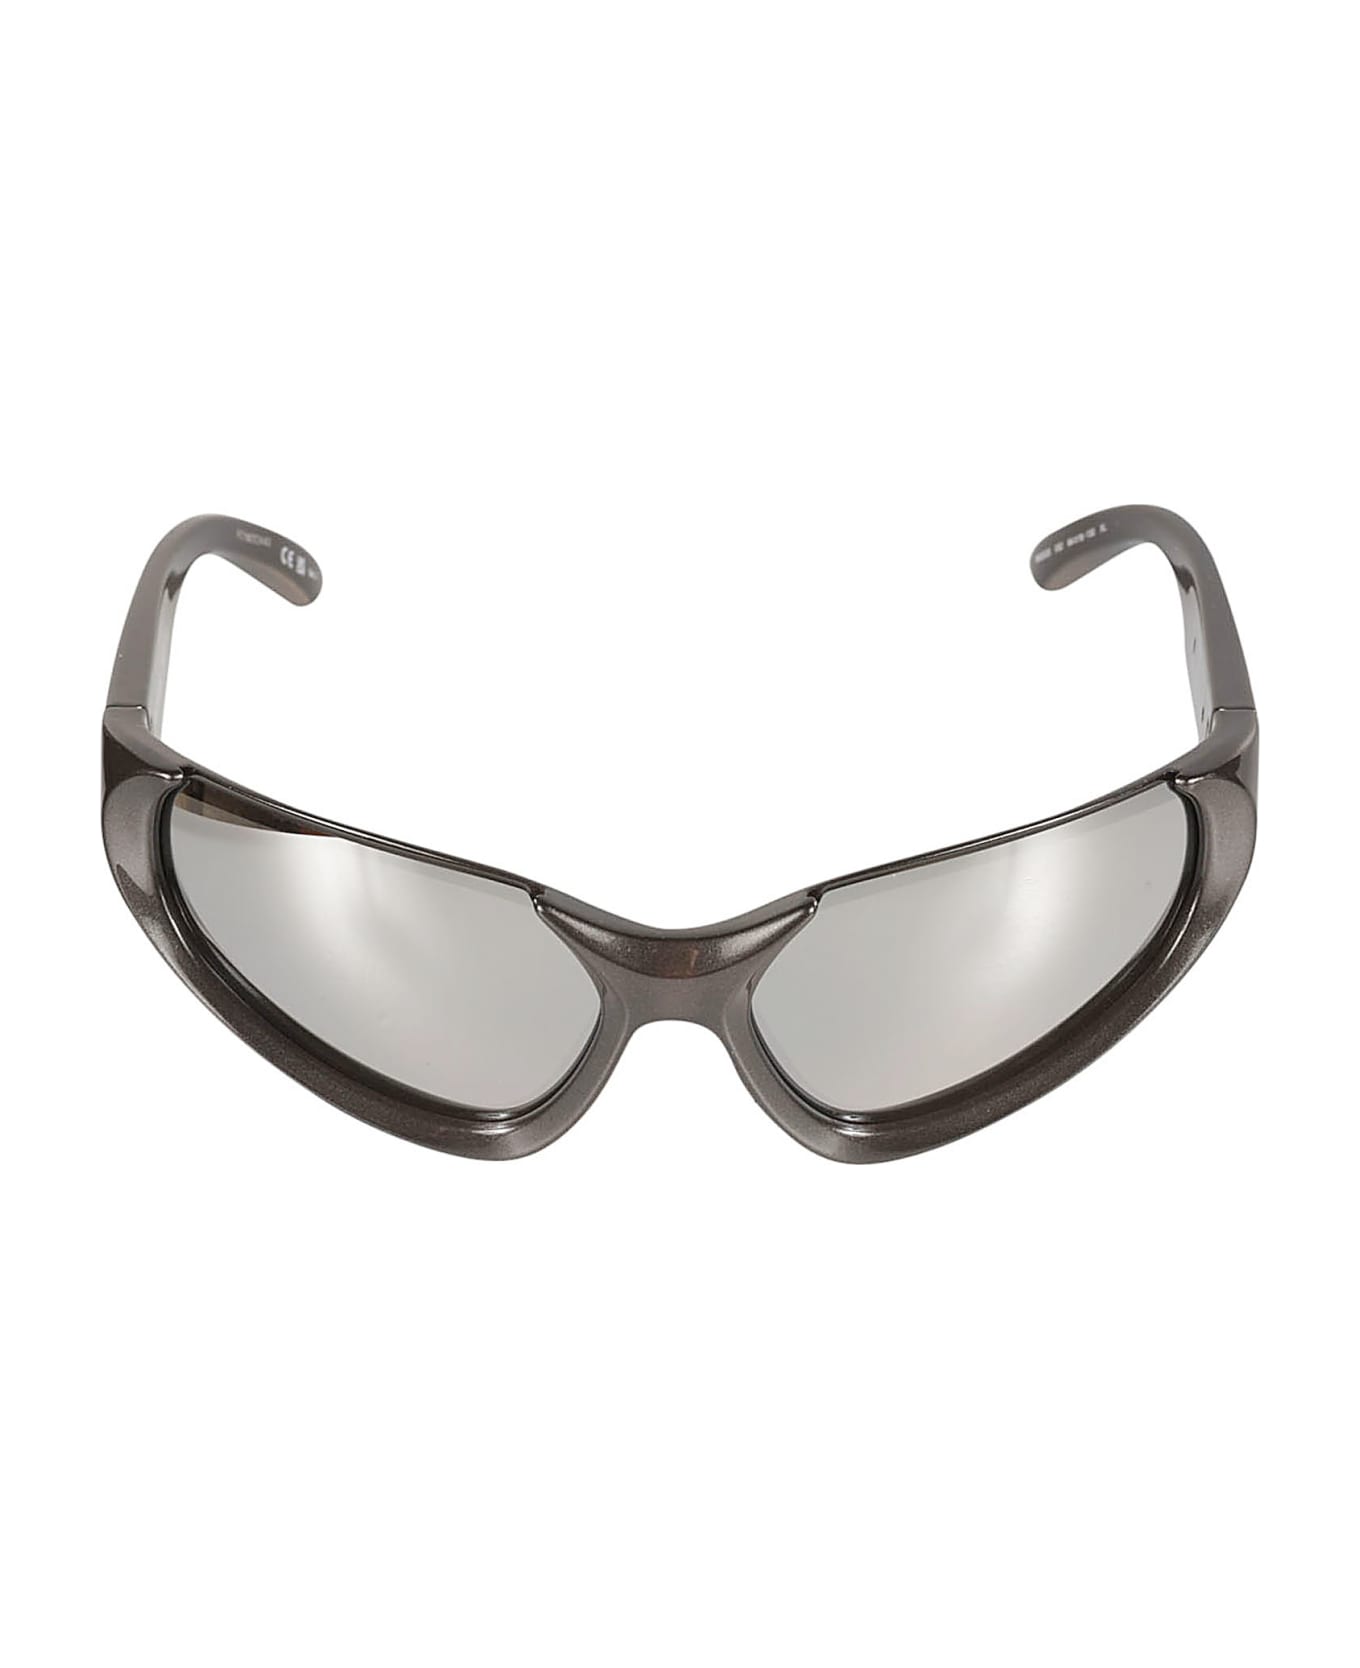 Balenciaga Eyewear Logo Sided Iconic Sunglasses - Silver